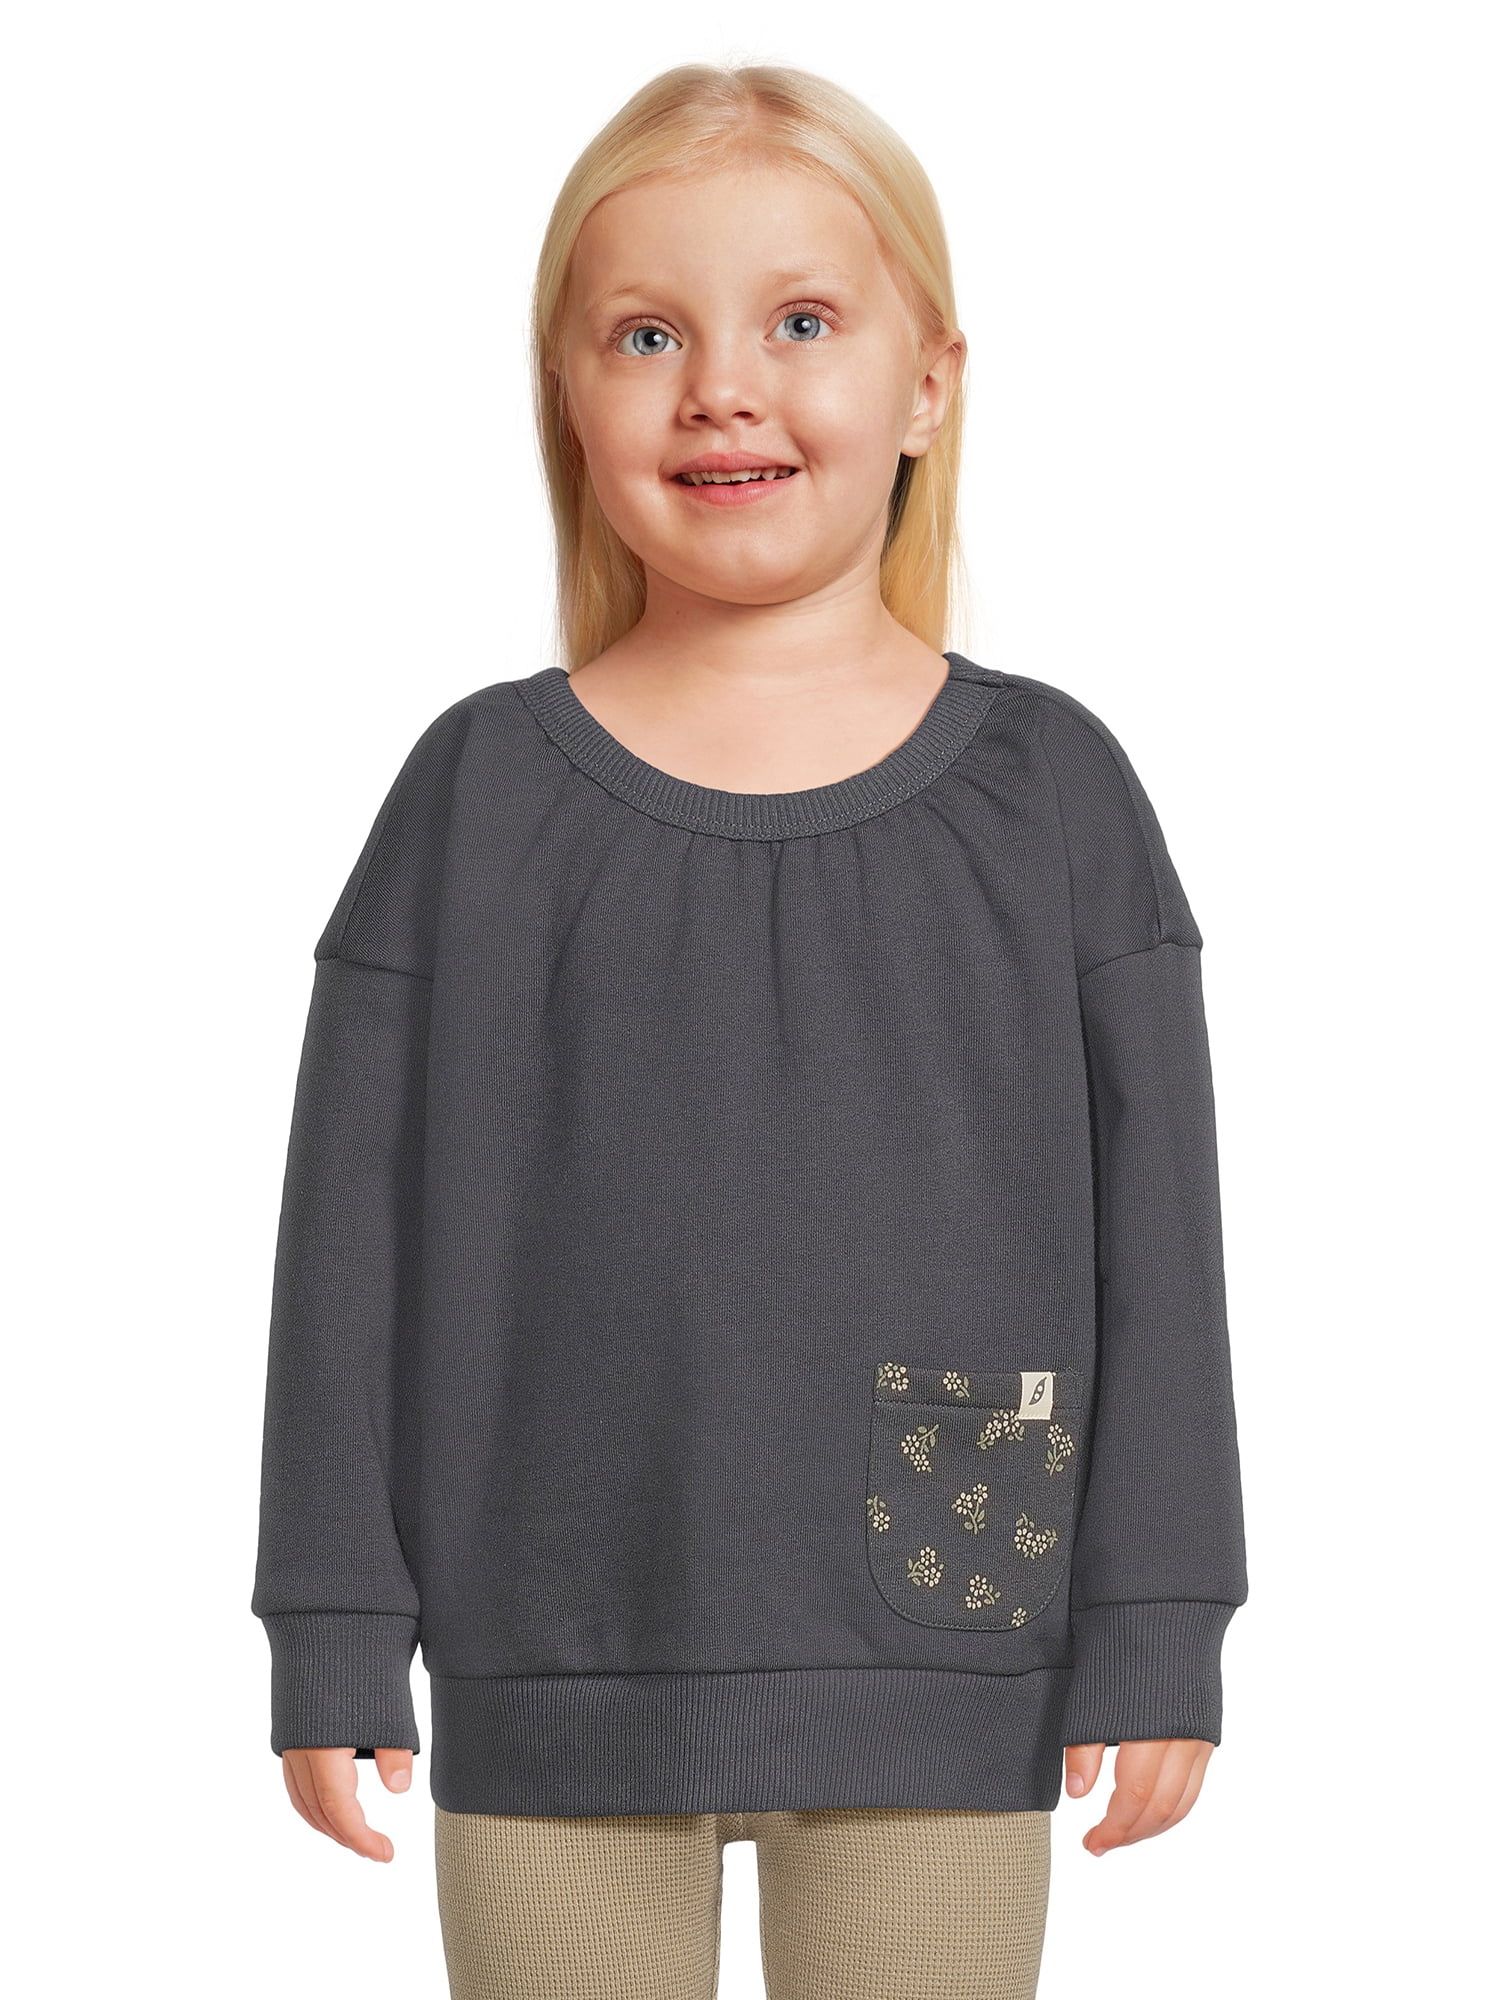 easy-peasy Toddler Girl Long Sleeve Pocket Sweatshirt, Sizes 12 Months-5T | Walmart (US)